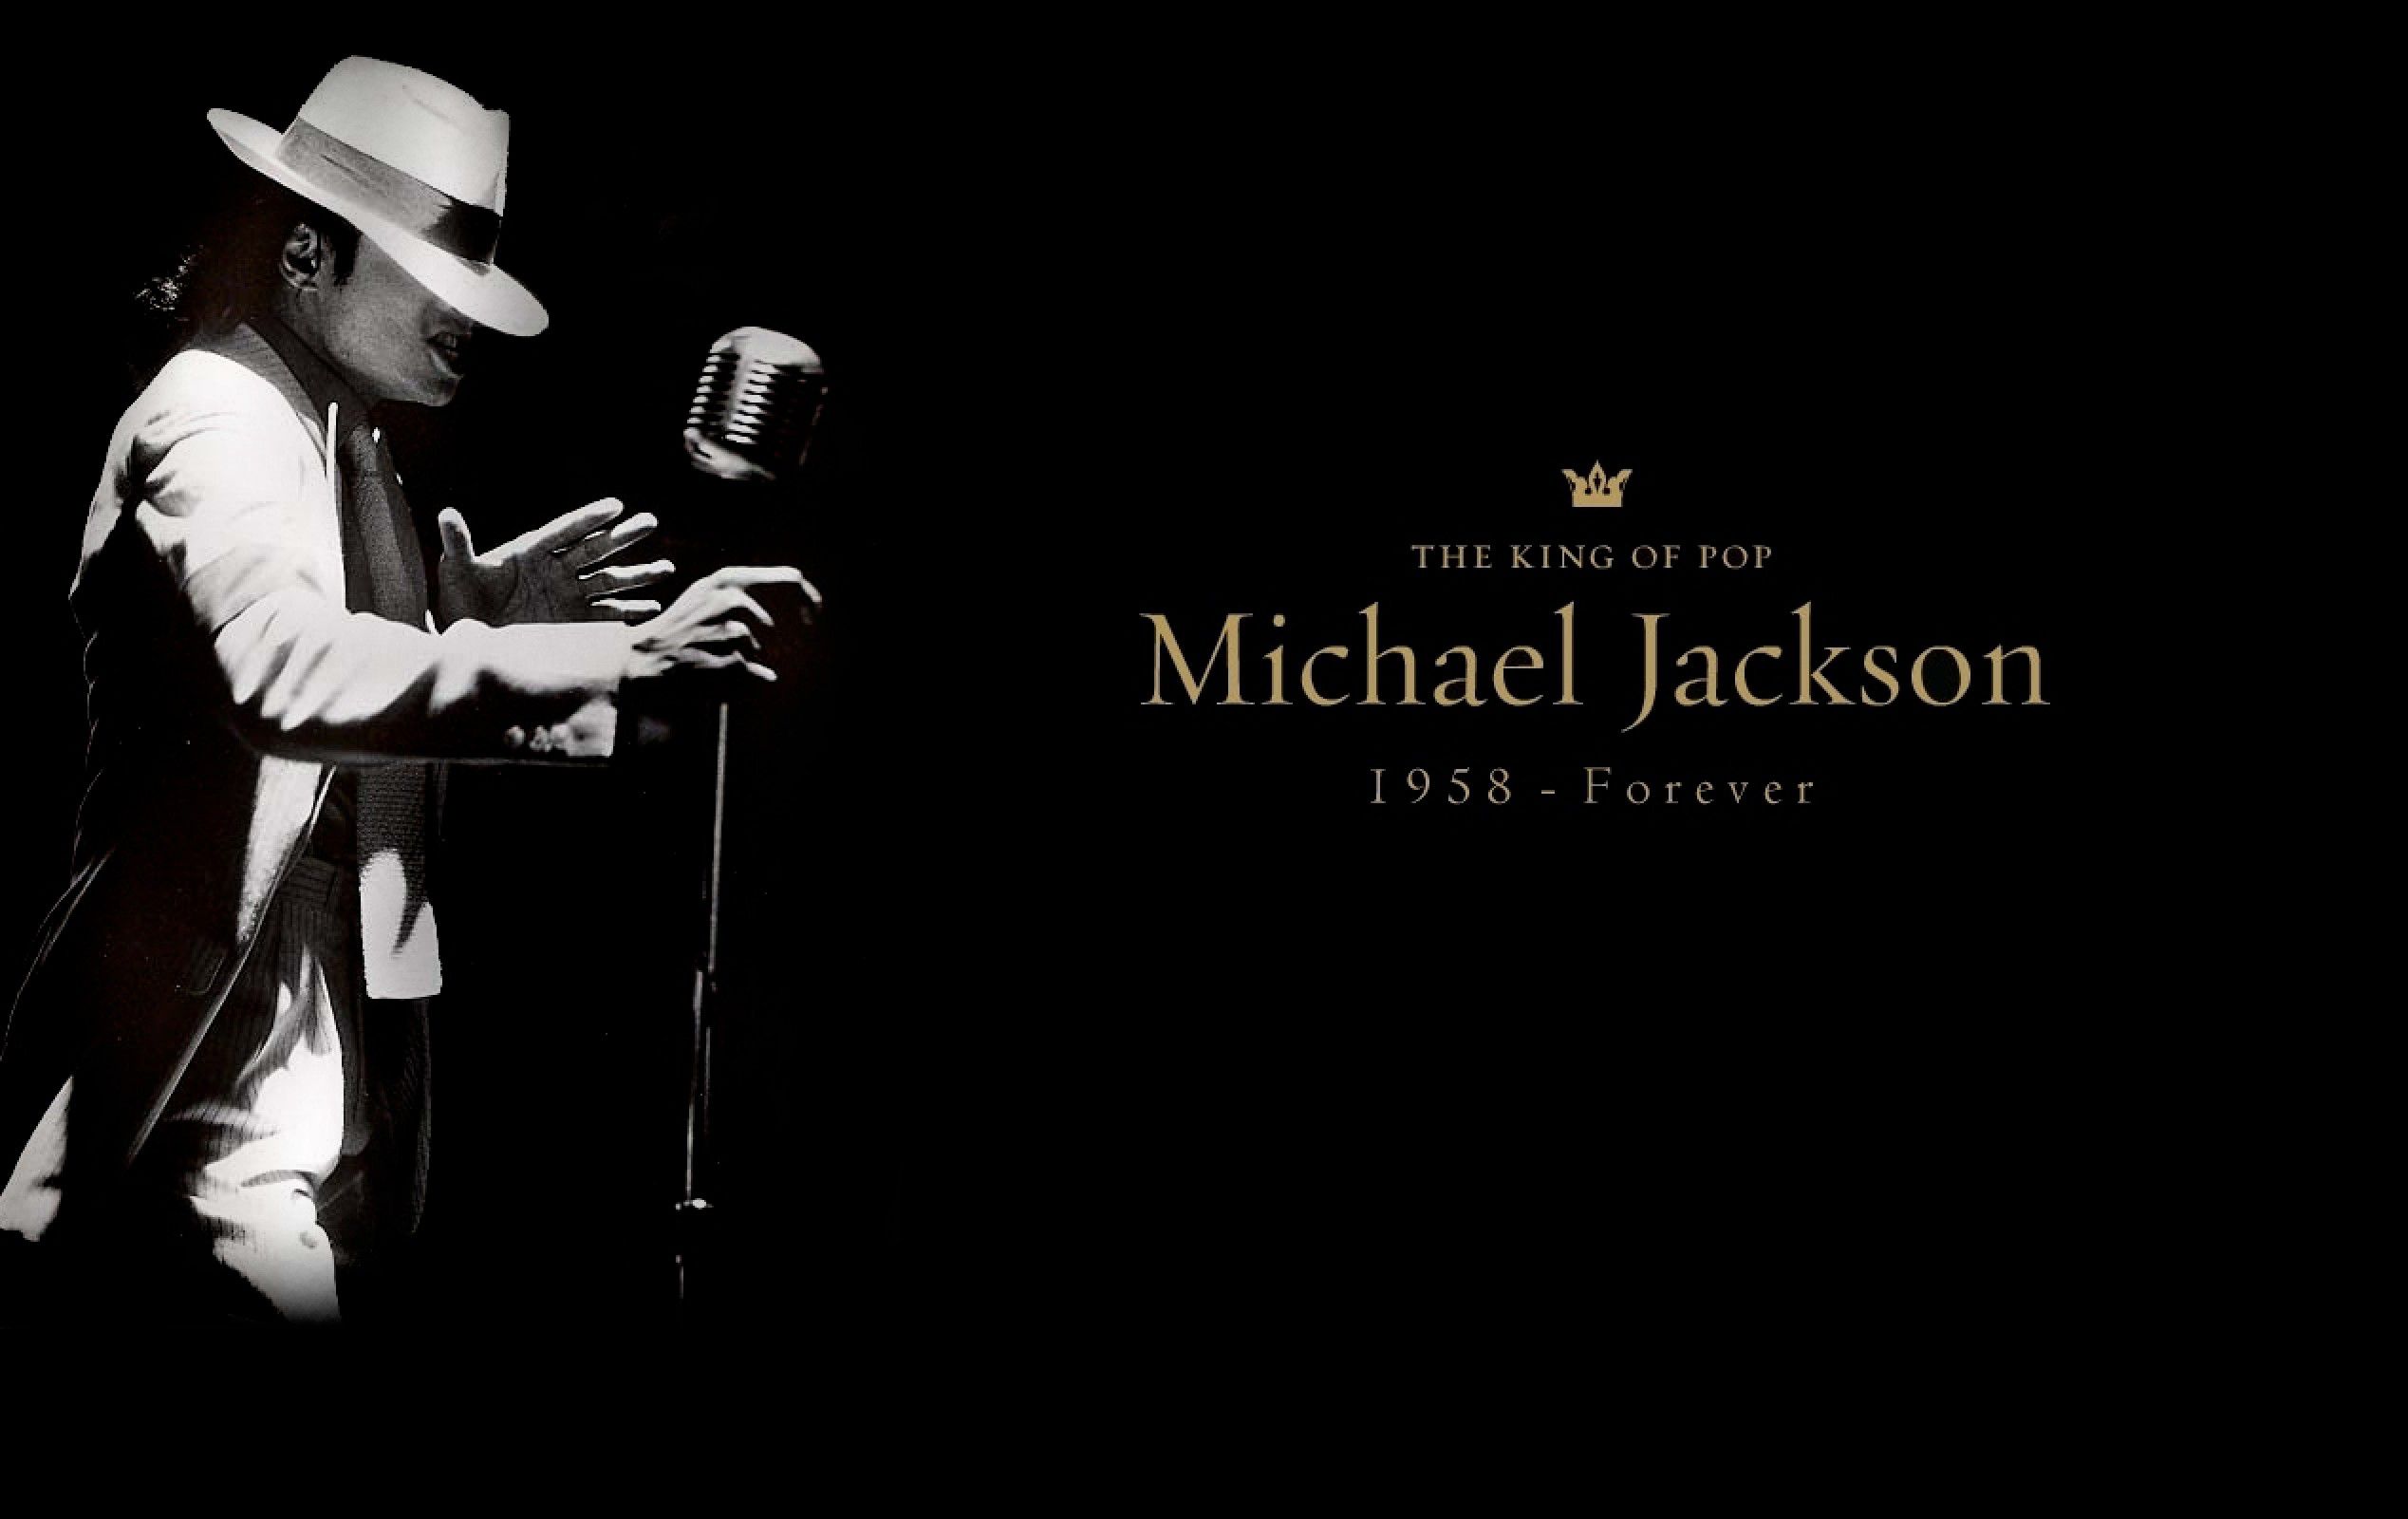 Michael Jackson king of Pop wallpaper Wallpaper, HD Celebrities 4K Wallpaper, Image, Photo and Background